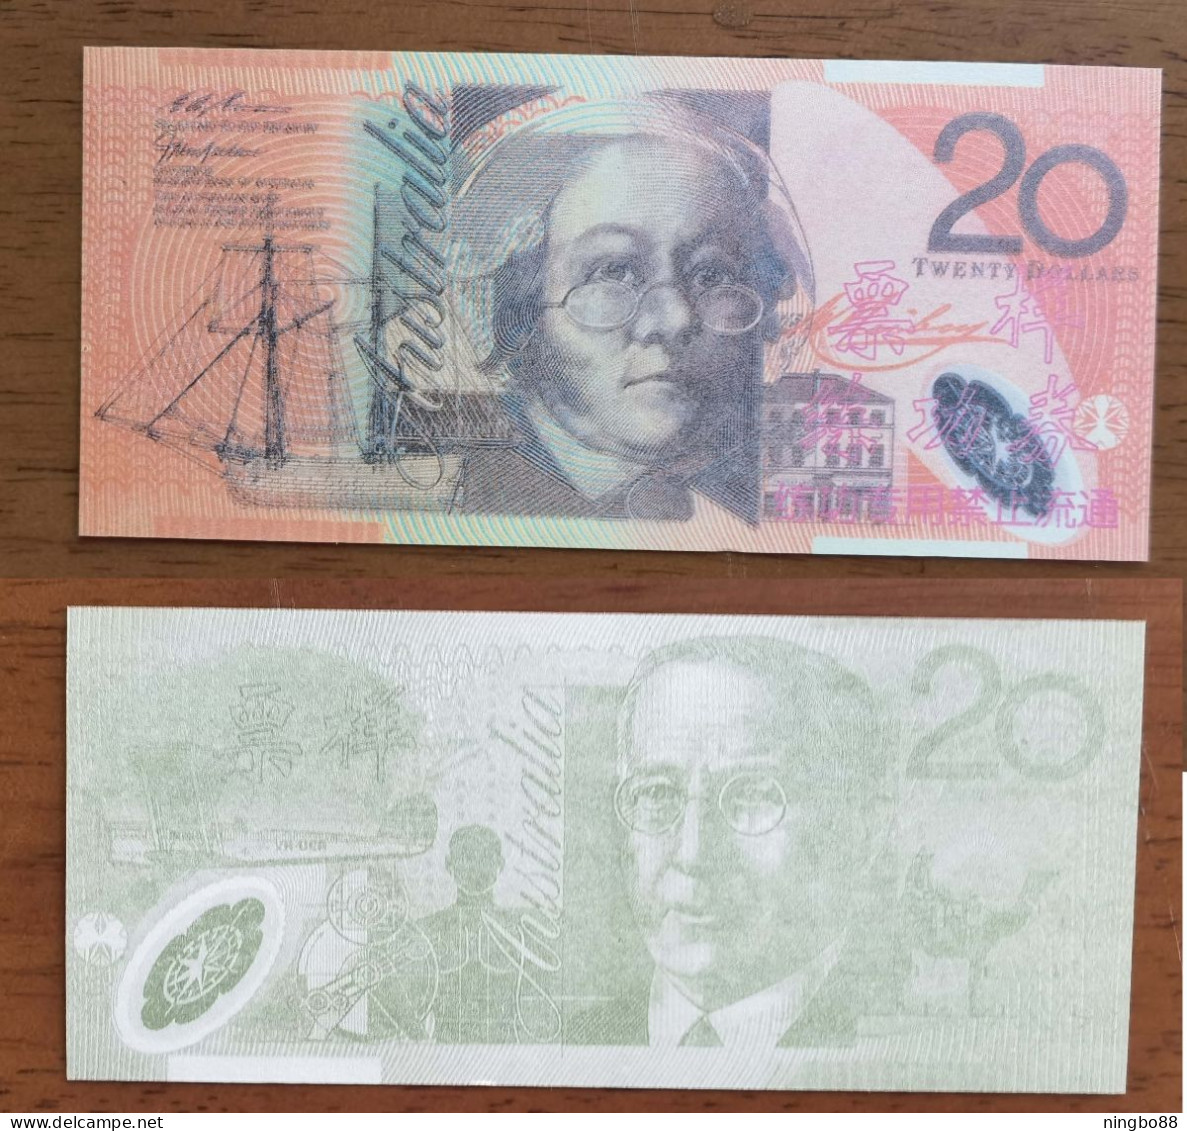 China BOC Bank (bank Of China) Training/test Banknote,AUSTRALIA B-2 Series 20 Dollars Note Specimen Overprint - Finti & Campioni